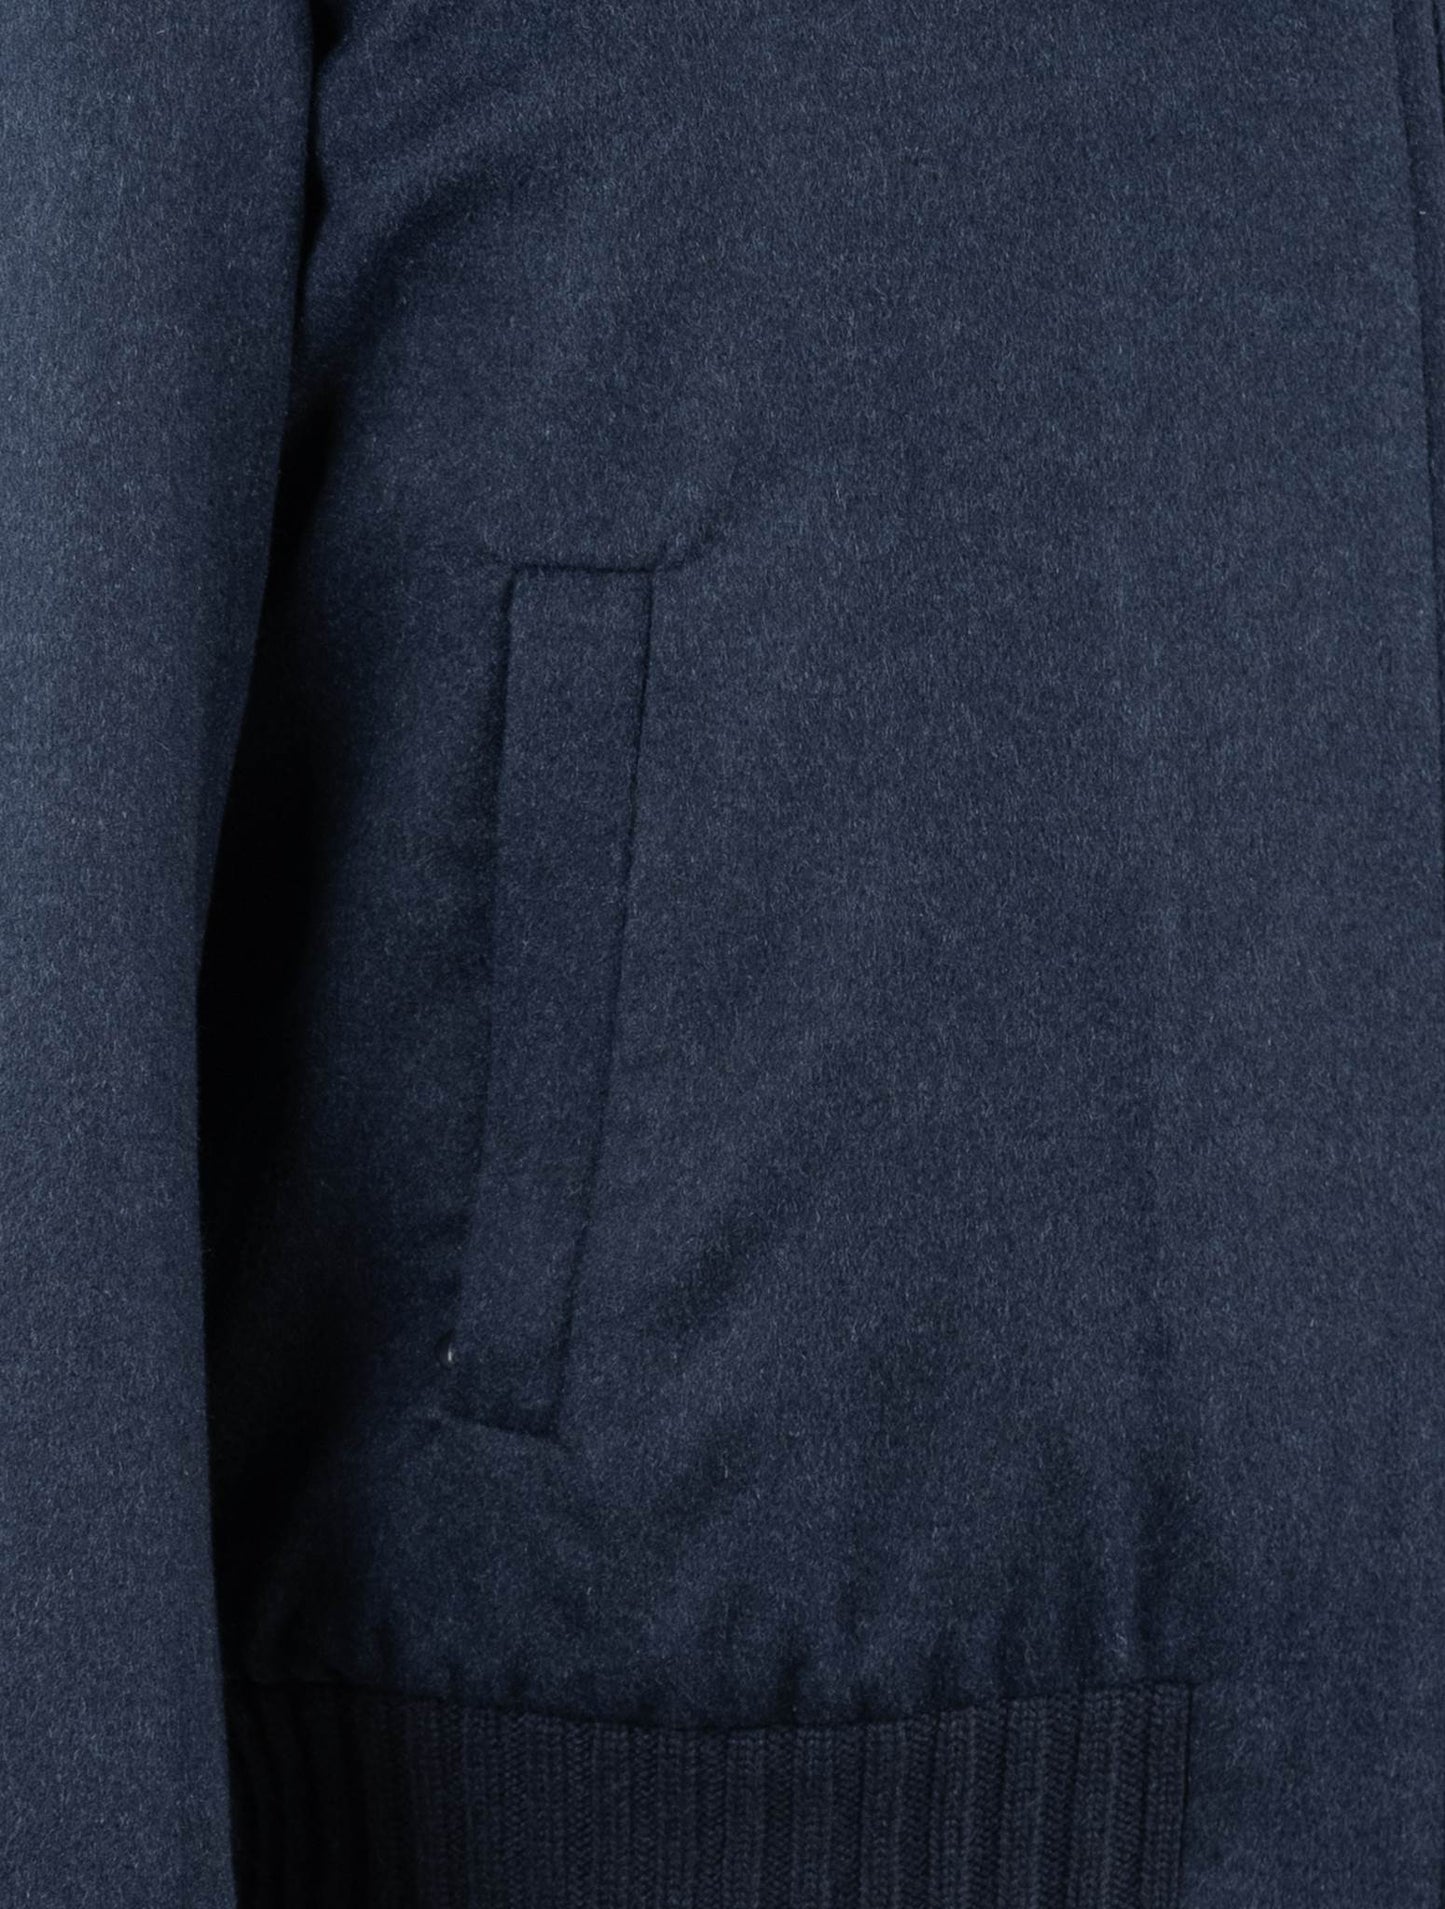 Cesare Attolini Blauer Mantel aus Kaschmir Nerz Pelz kragen